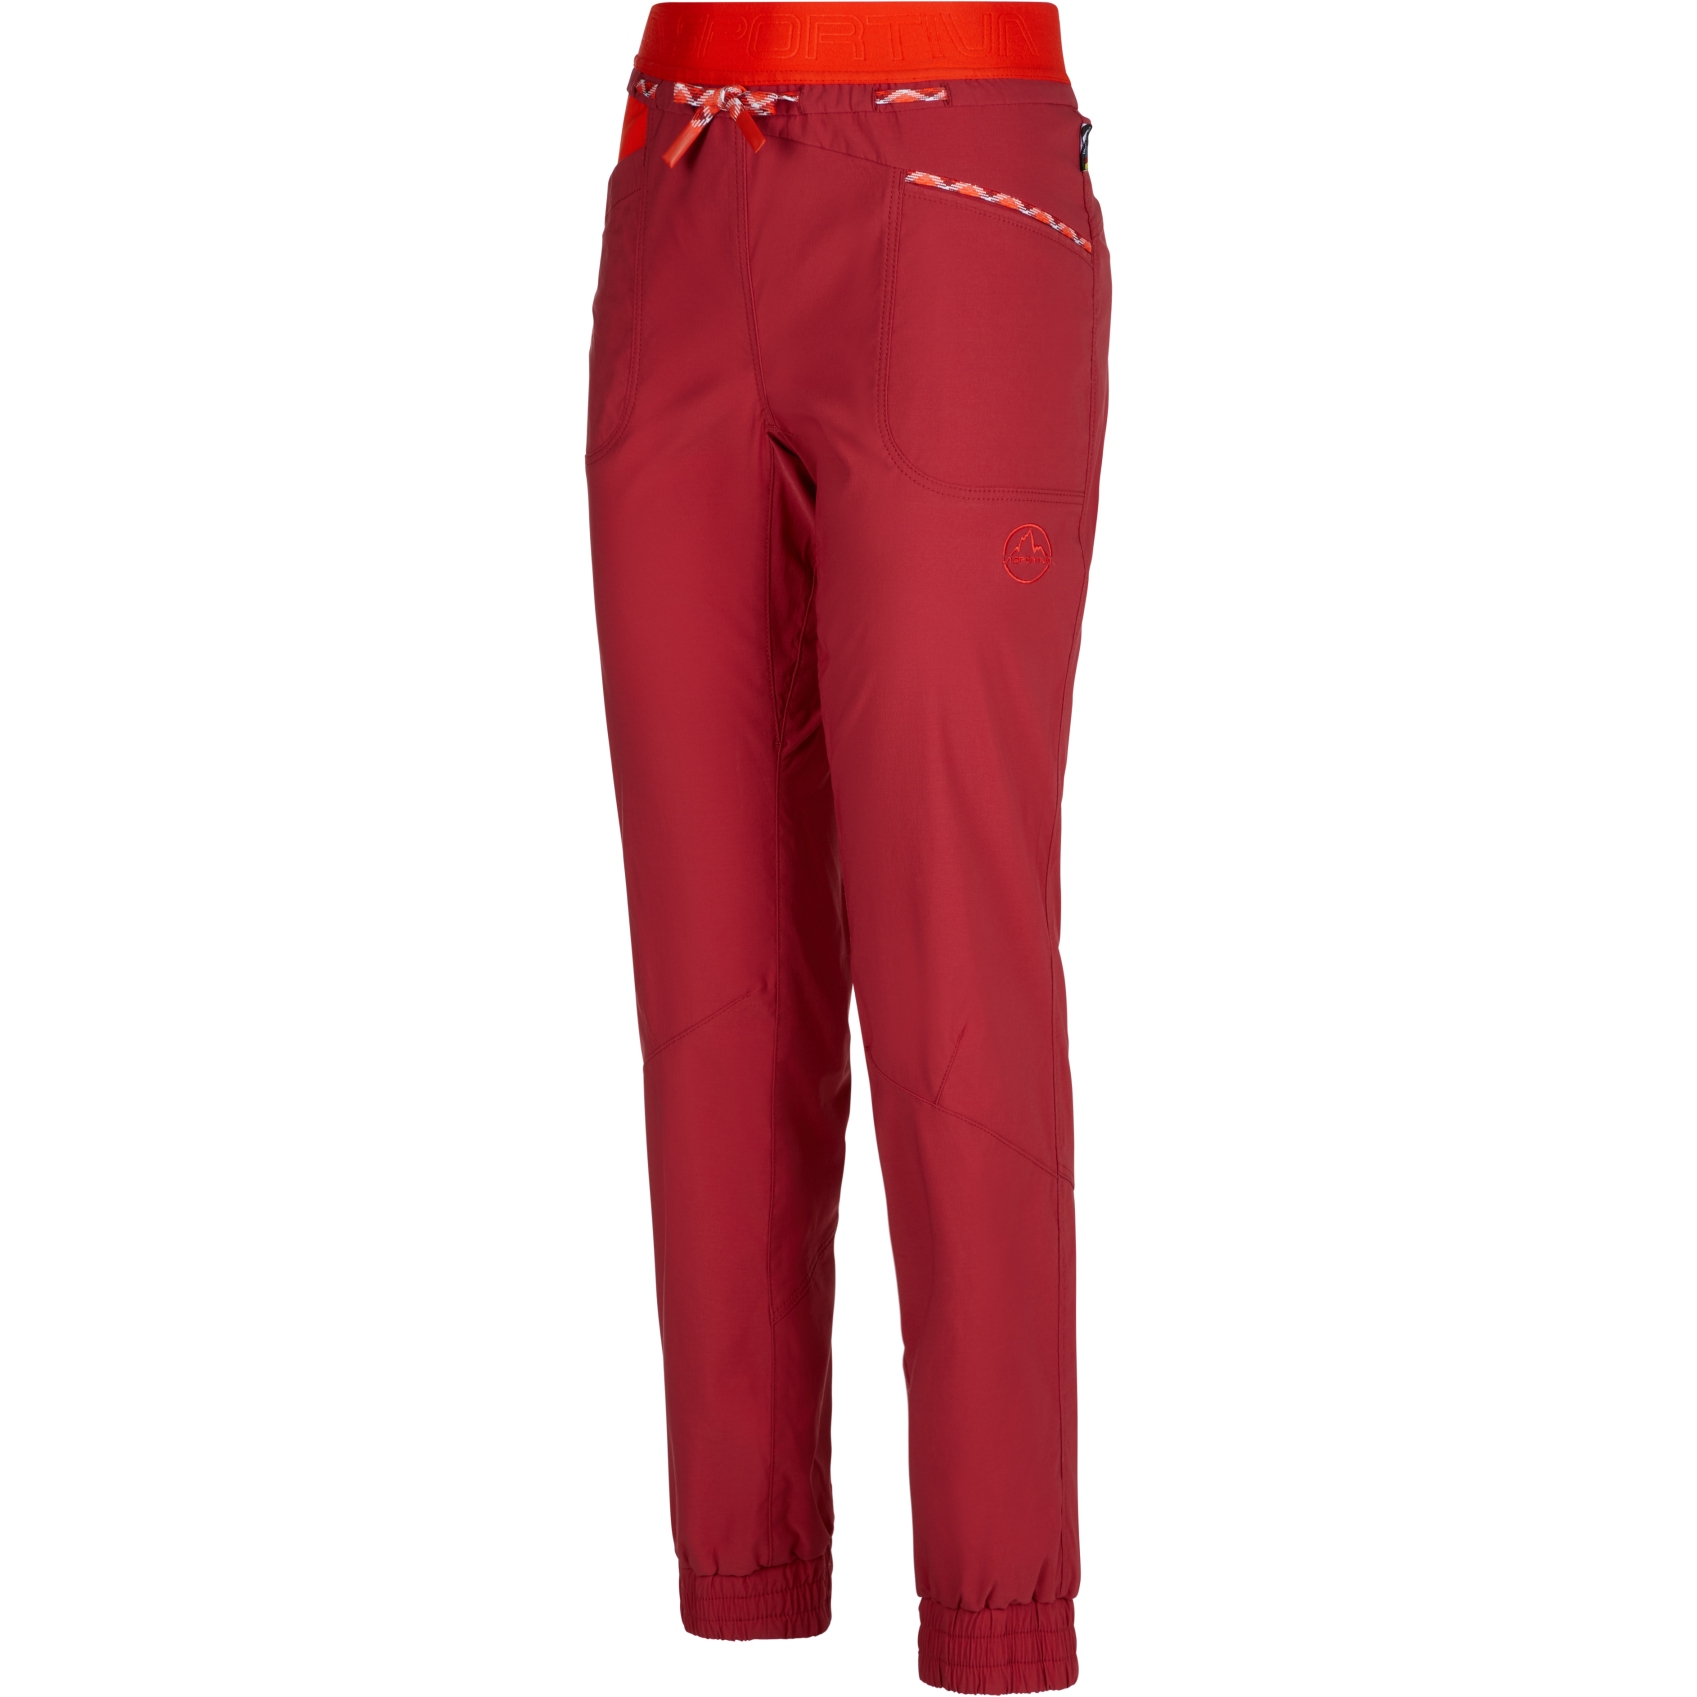 La Sportiva Mantra Pants Women - Velvet/Cherry Tomato